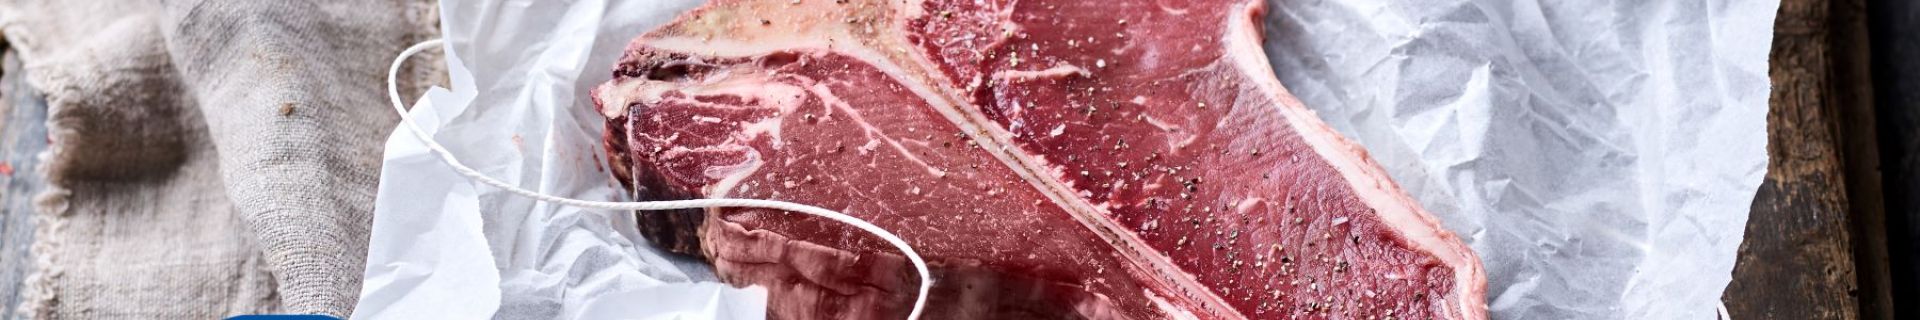 On The Butcher's Block: T-Bone Steak 